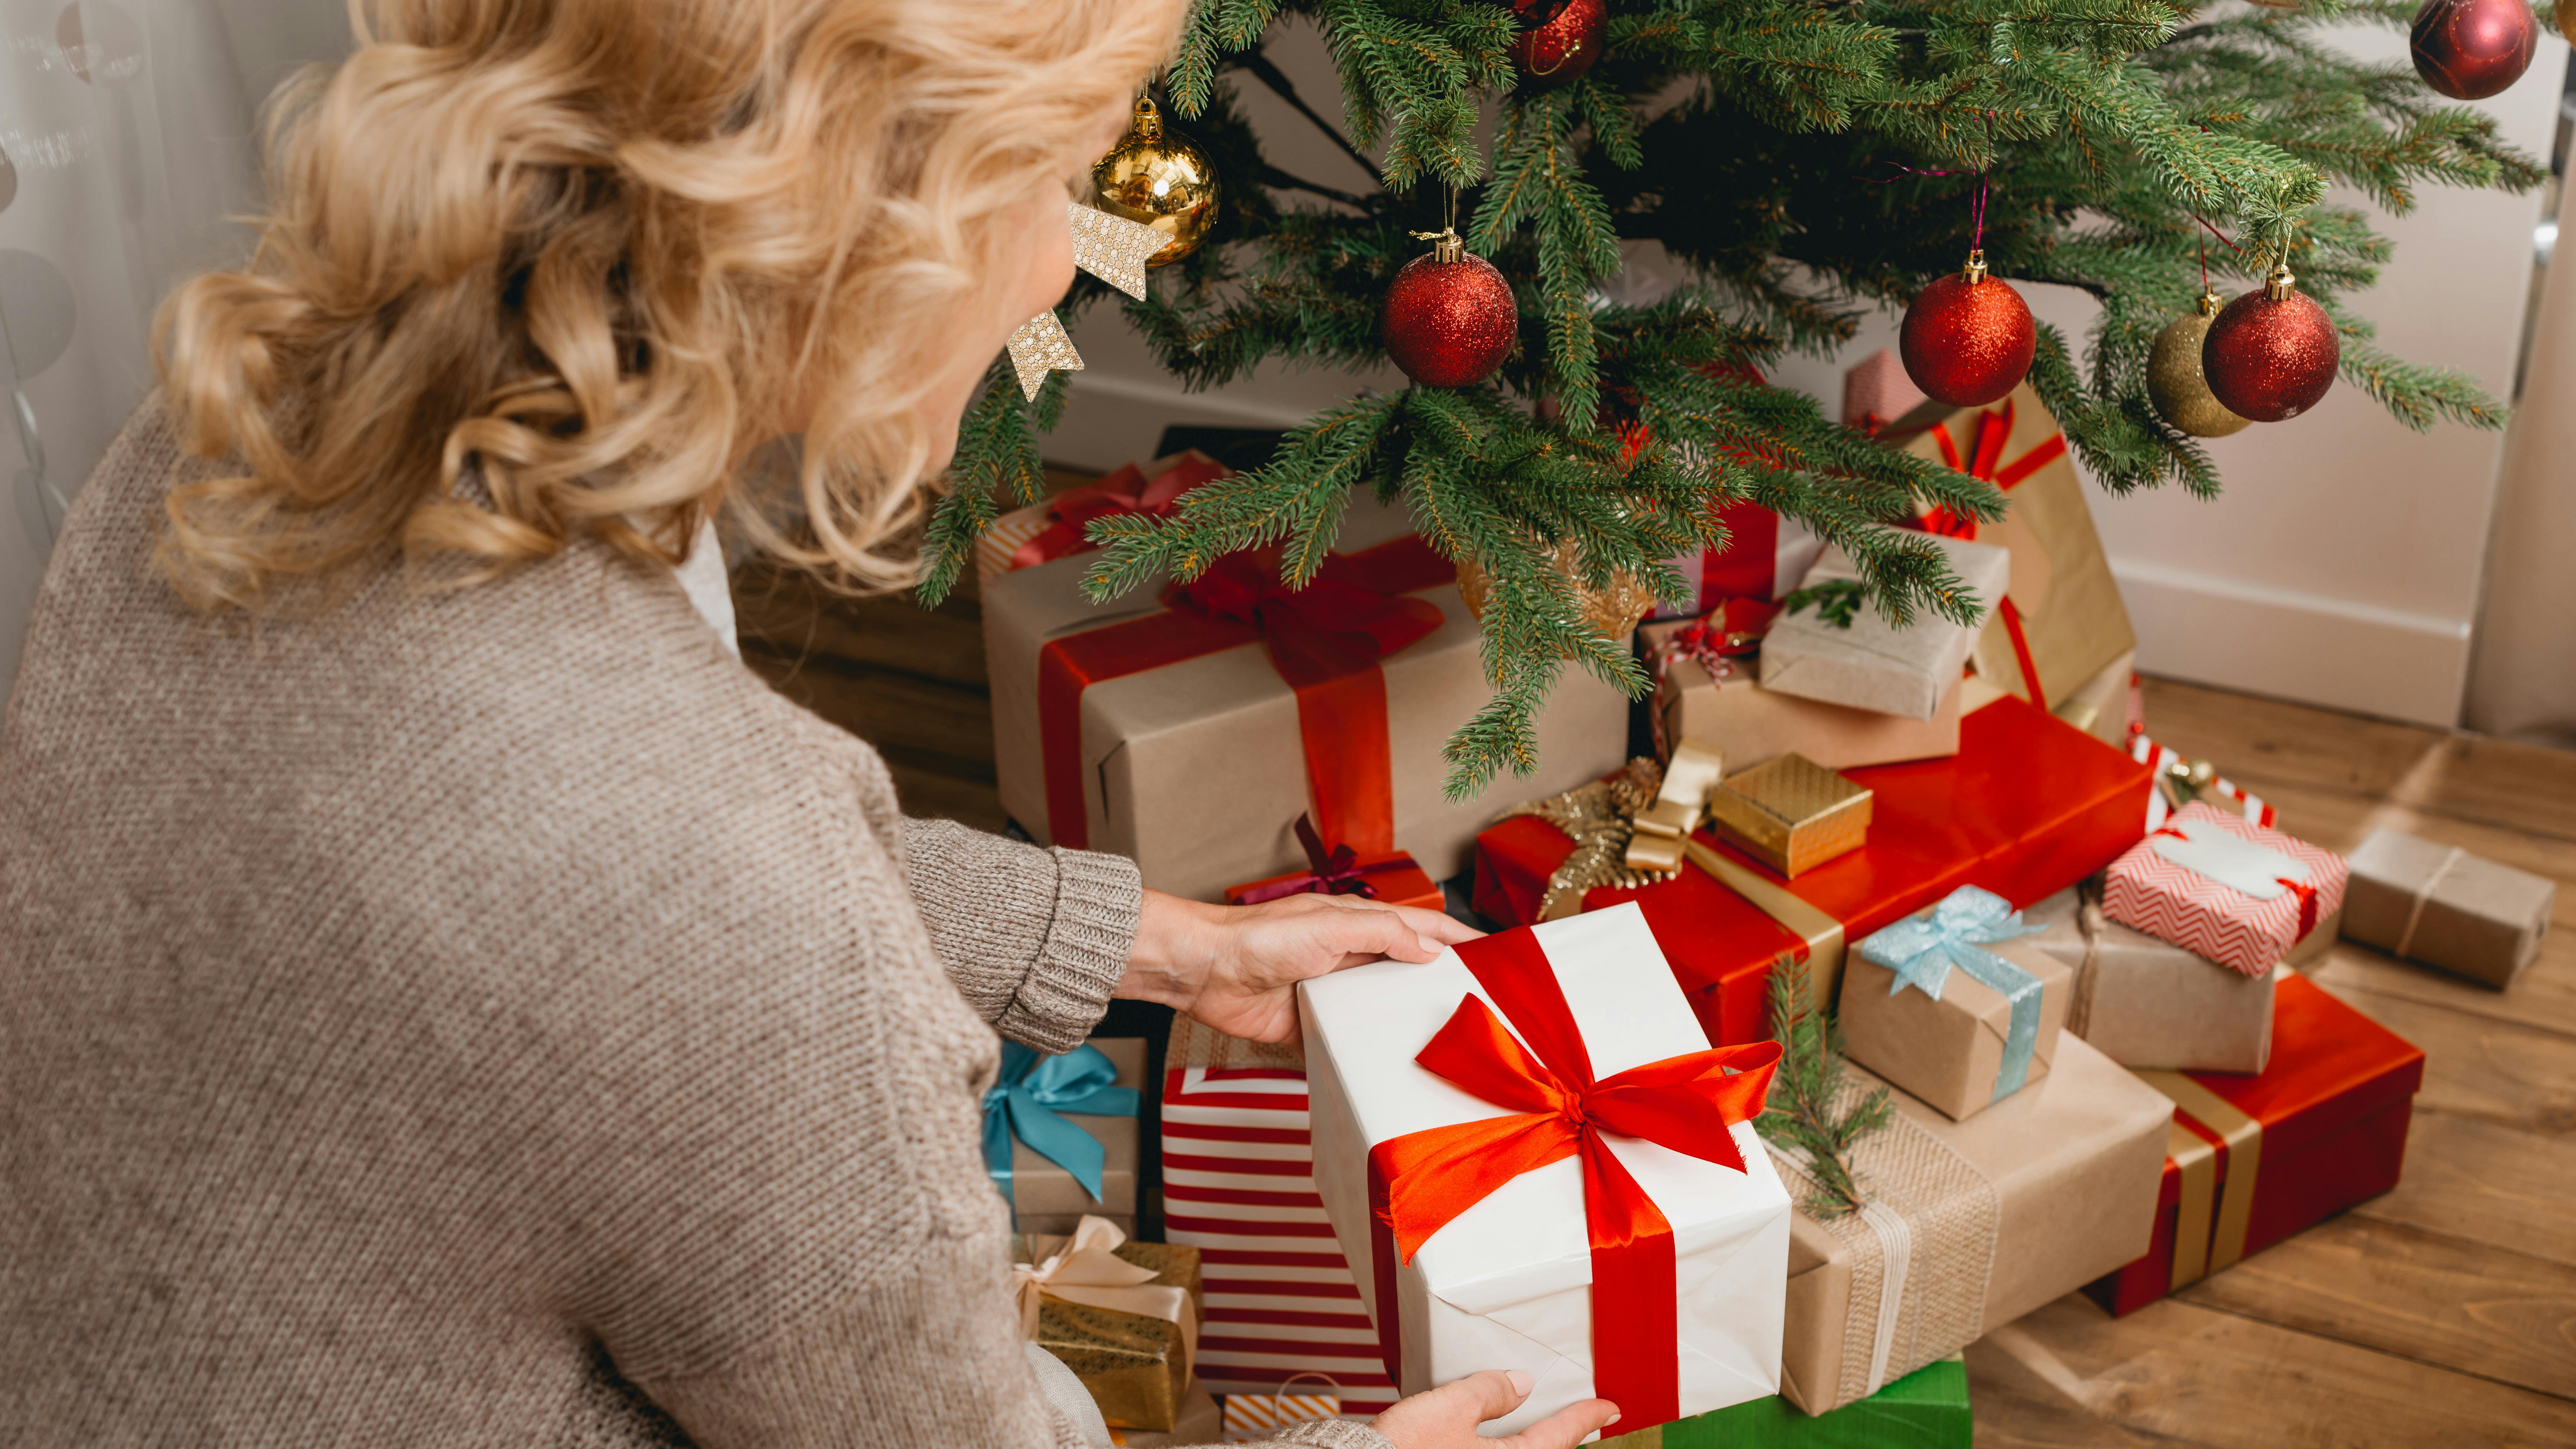 Med tre tommelfingerregler kan du let spare penge i julen